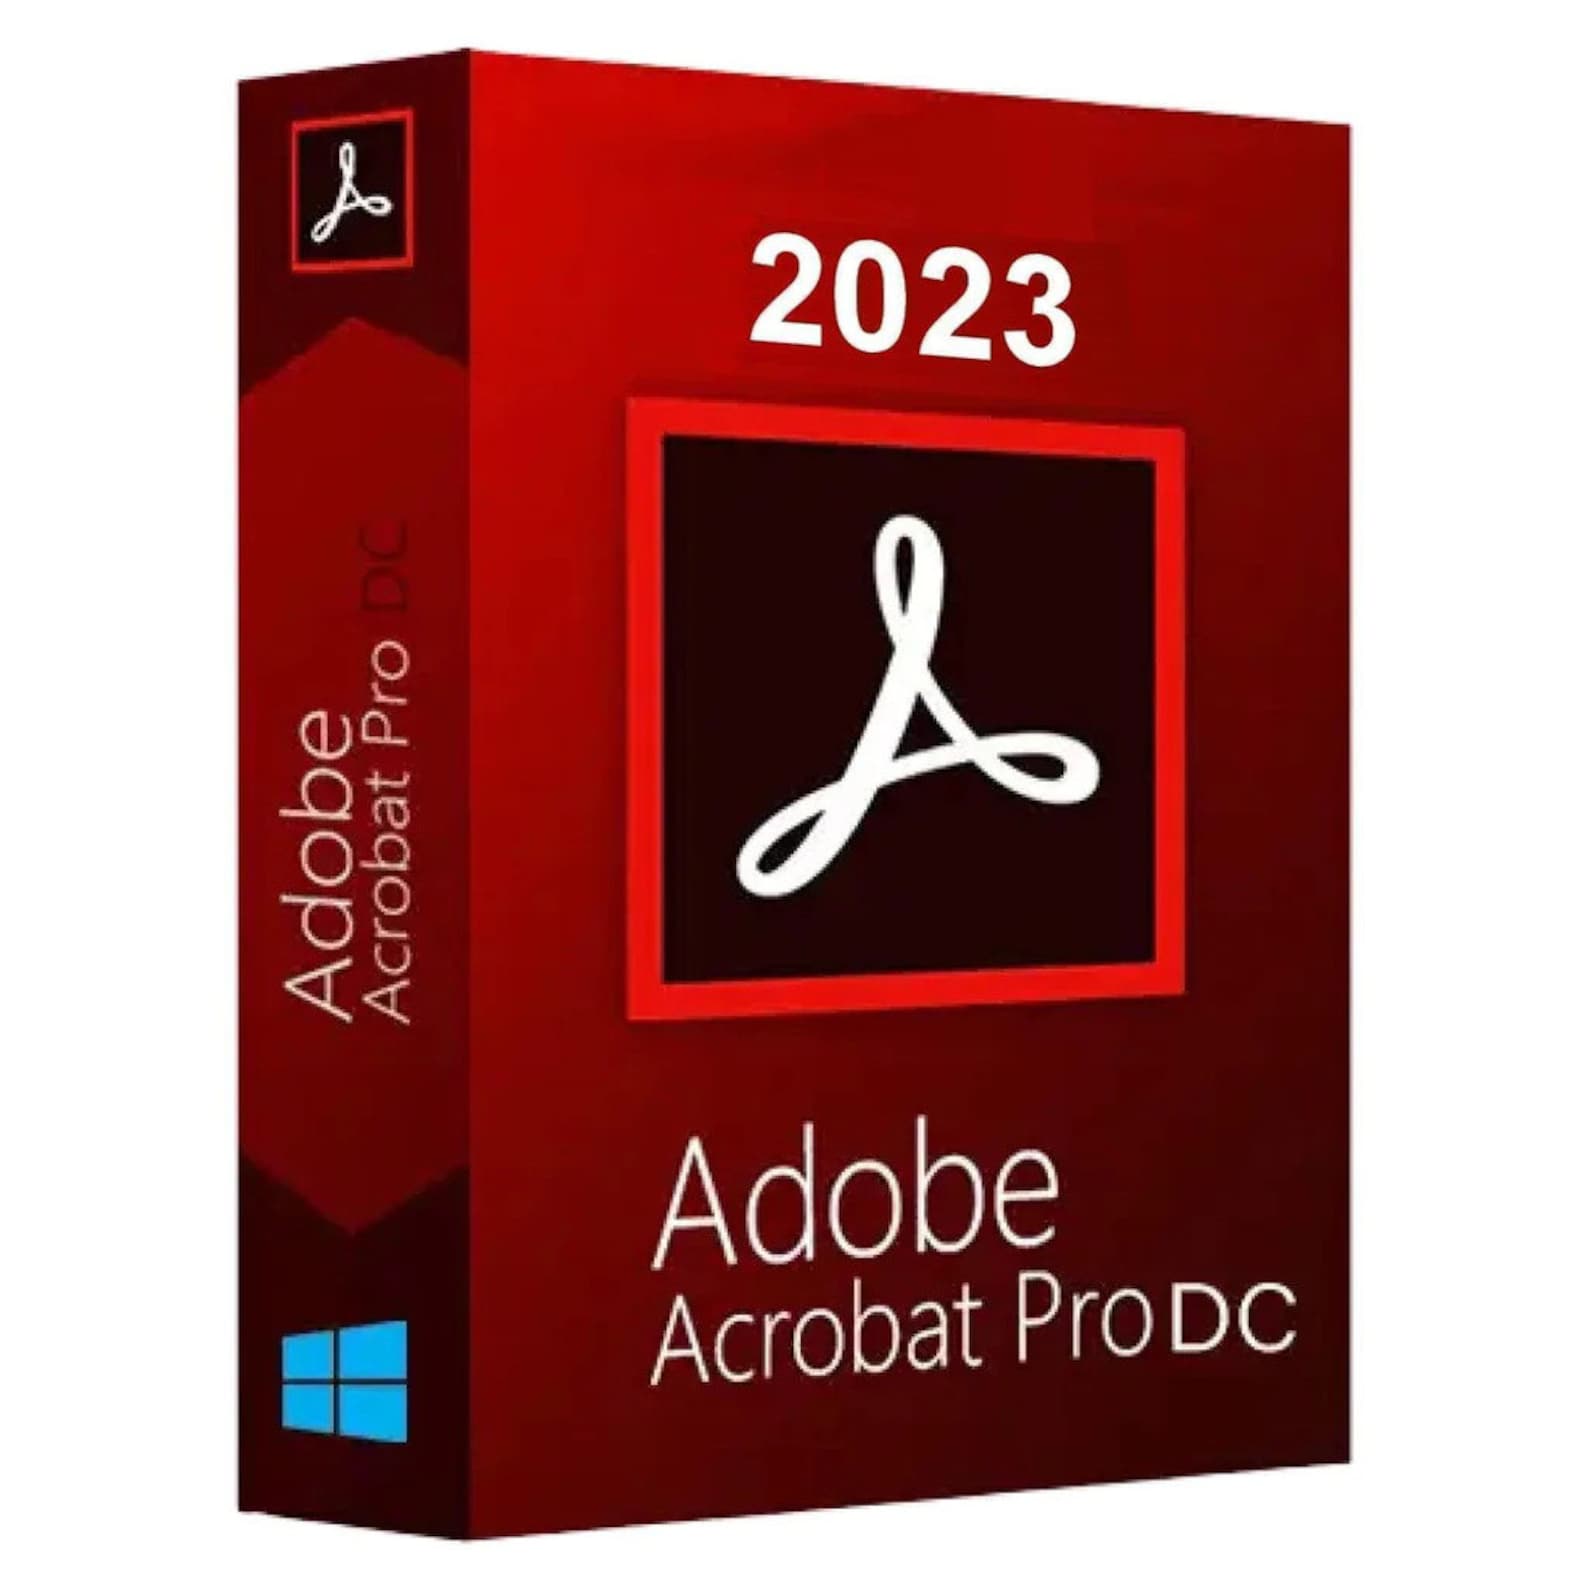 Adobe Acrobat Pro DC 2023 | Full Version | Genuine Lifetime License | AUS STOCK - INFINITE-ITECH